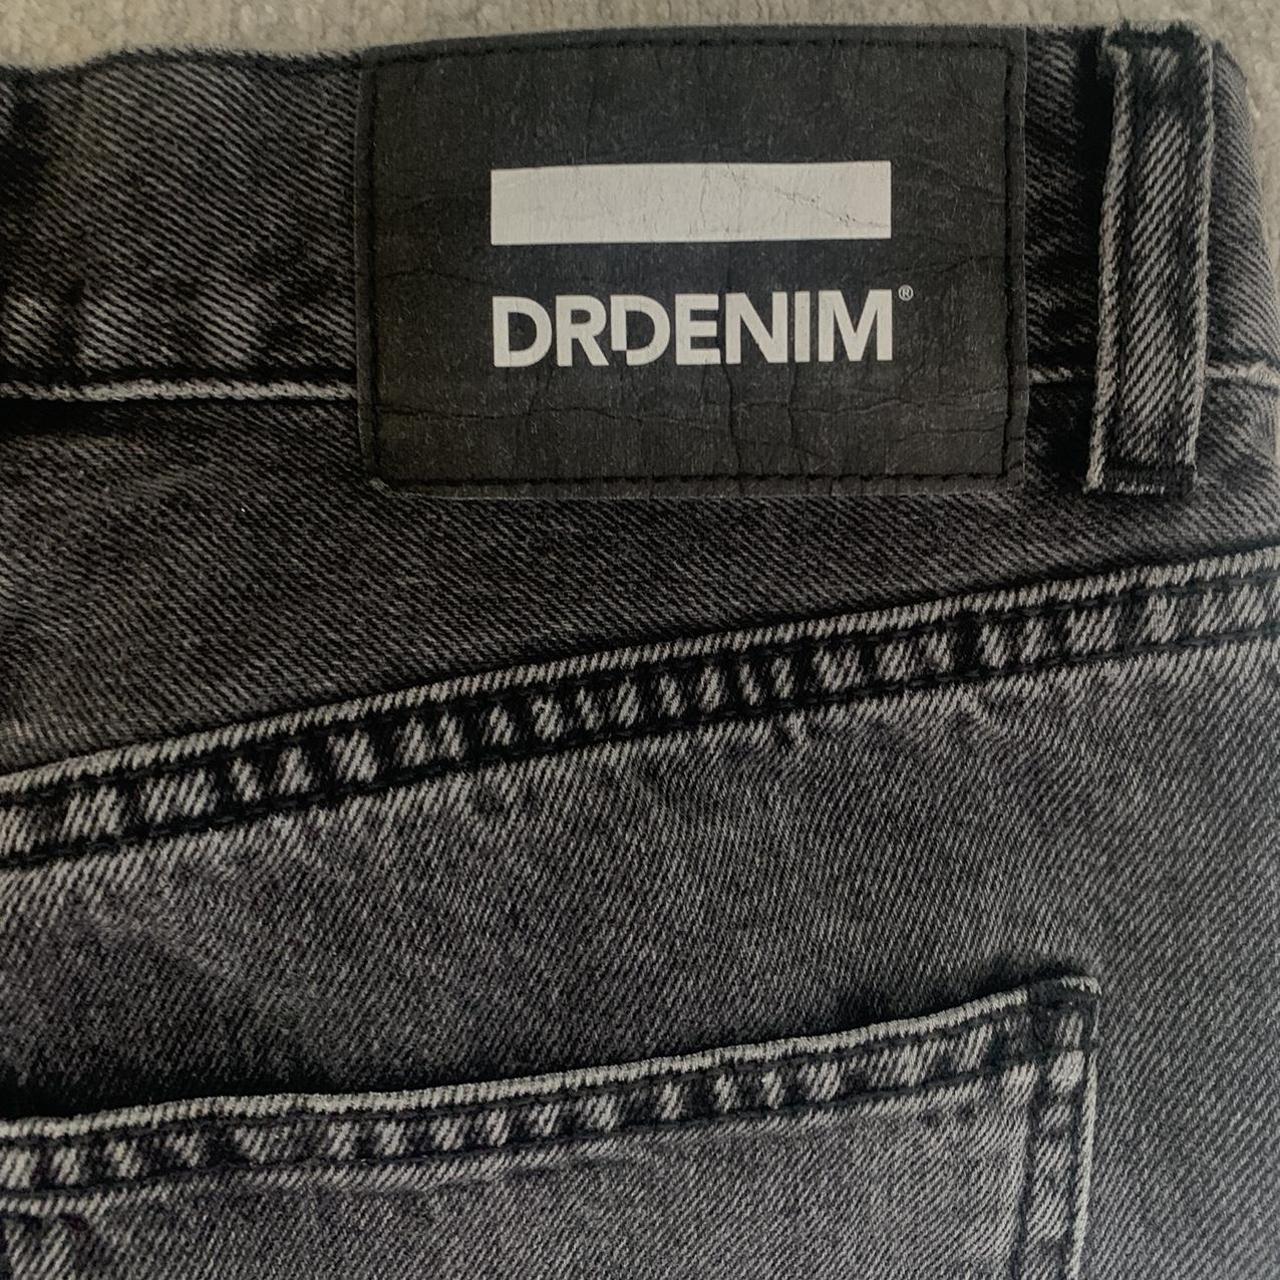 Dr. Denim Women's Jeans (4)